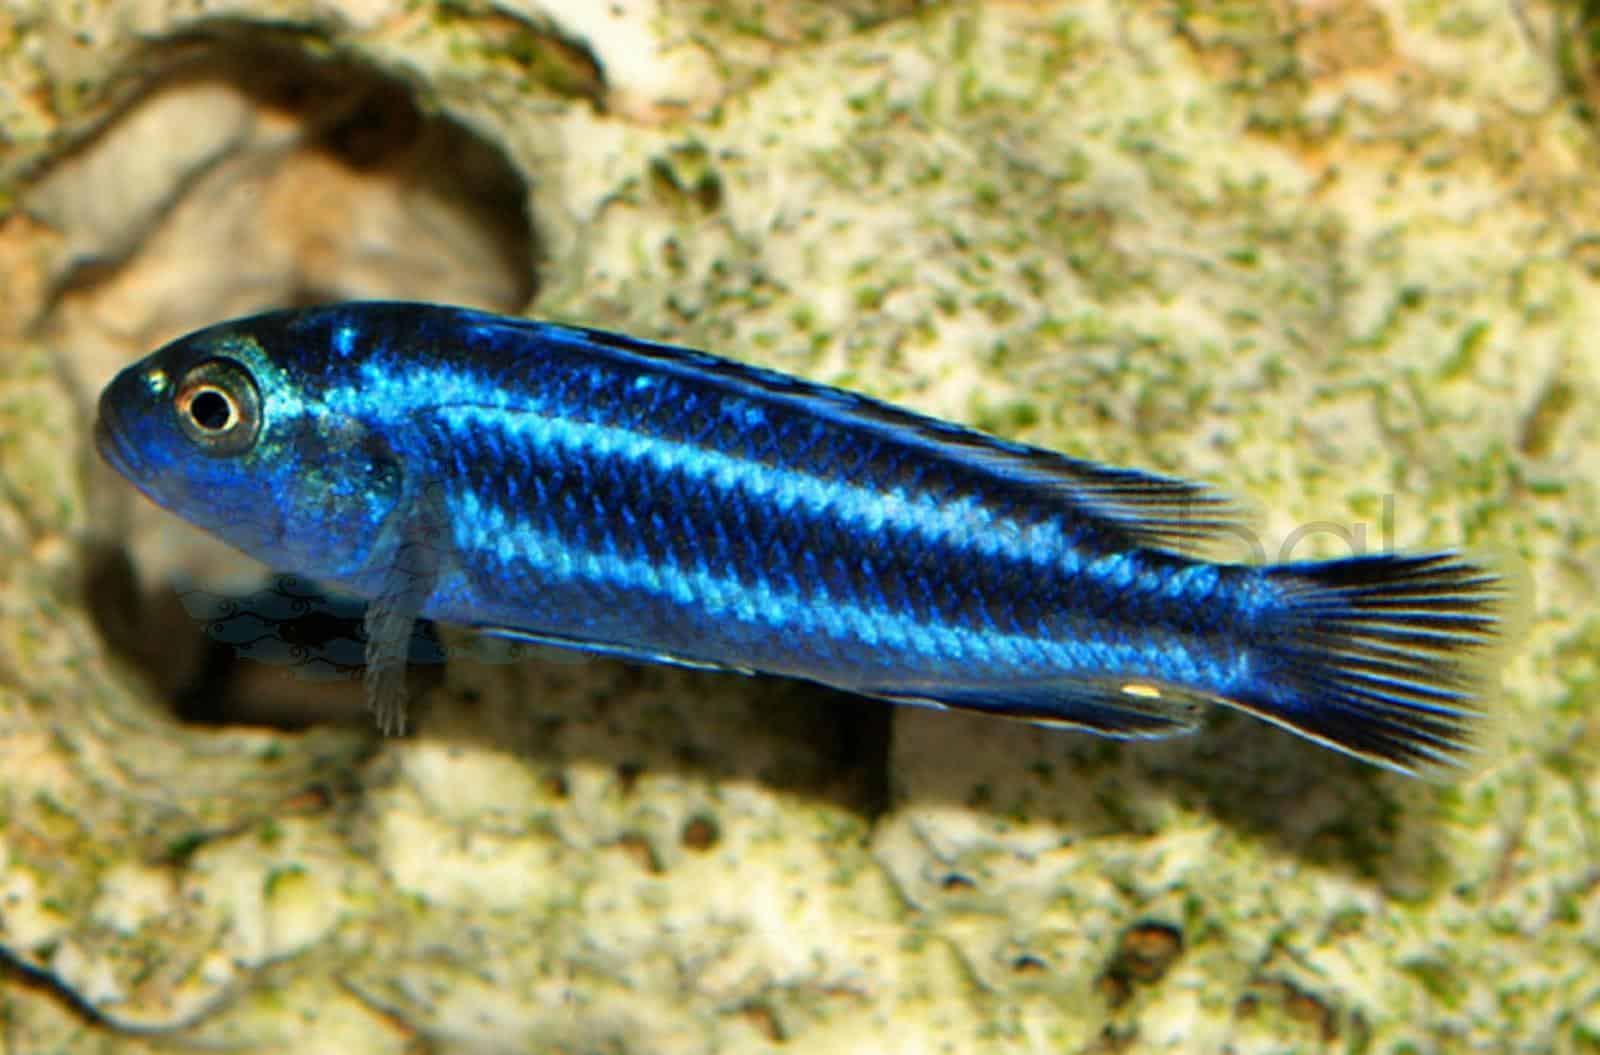 Kobaltorangebarsch (Melanochromis johannii)